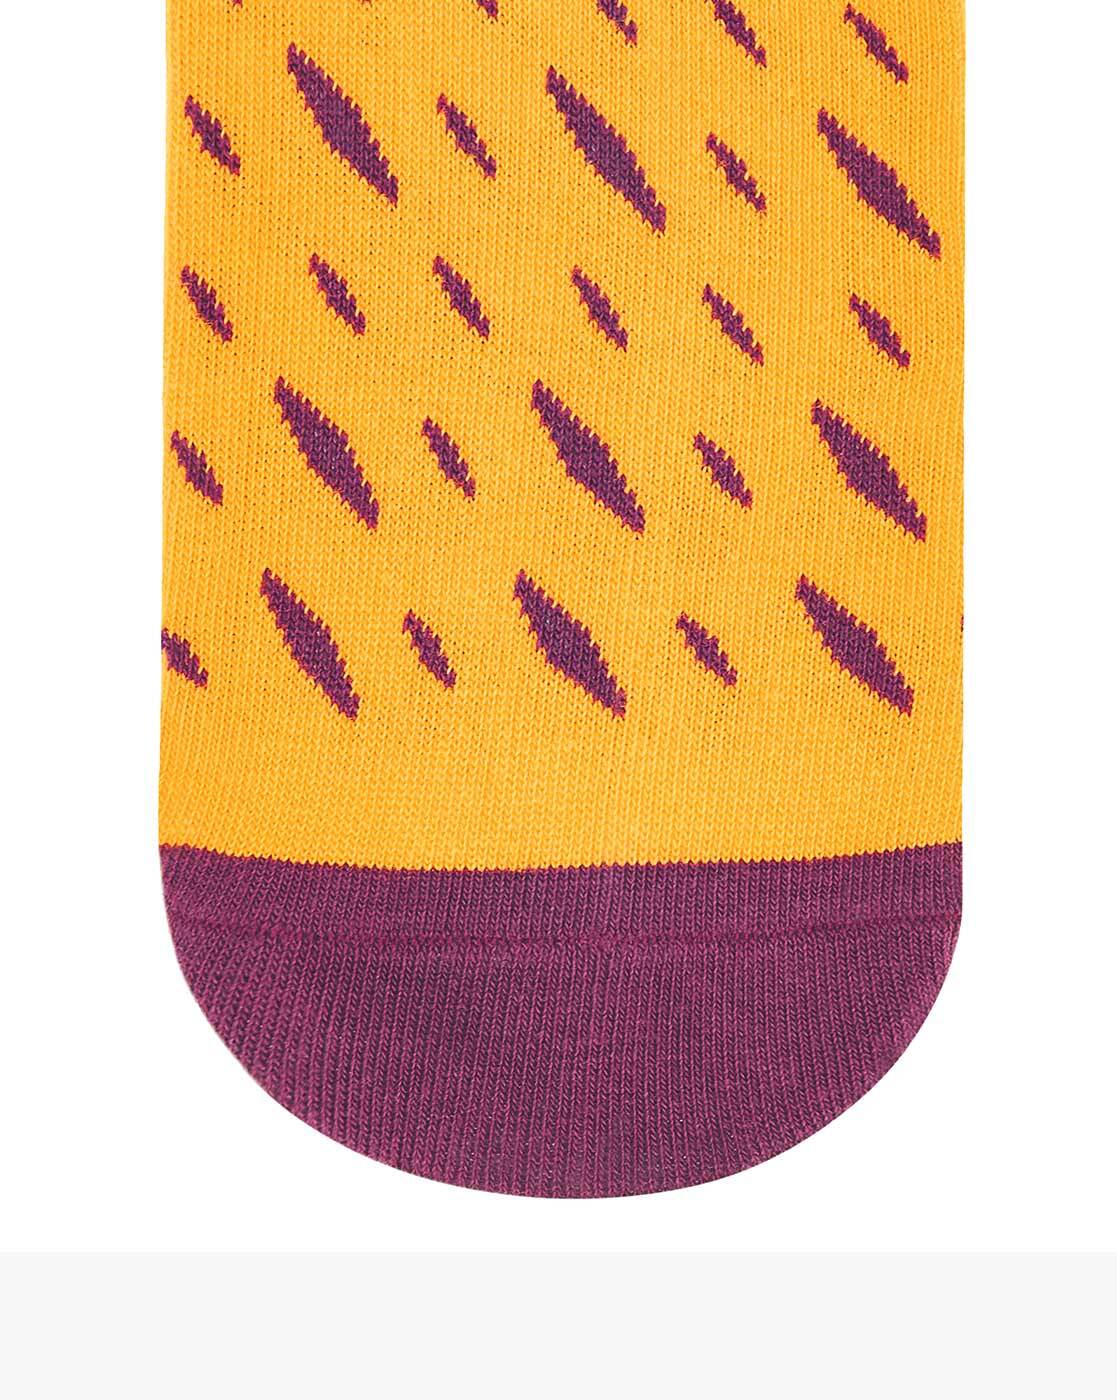 Buy Yellow Socks for Men by Dynamocks Online